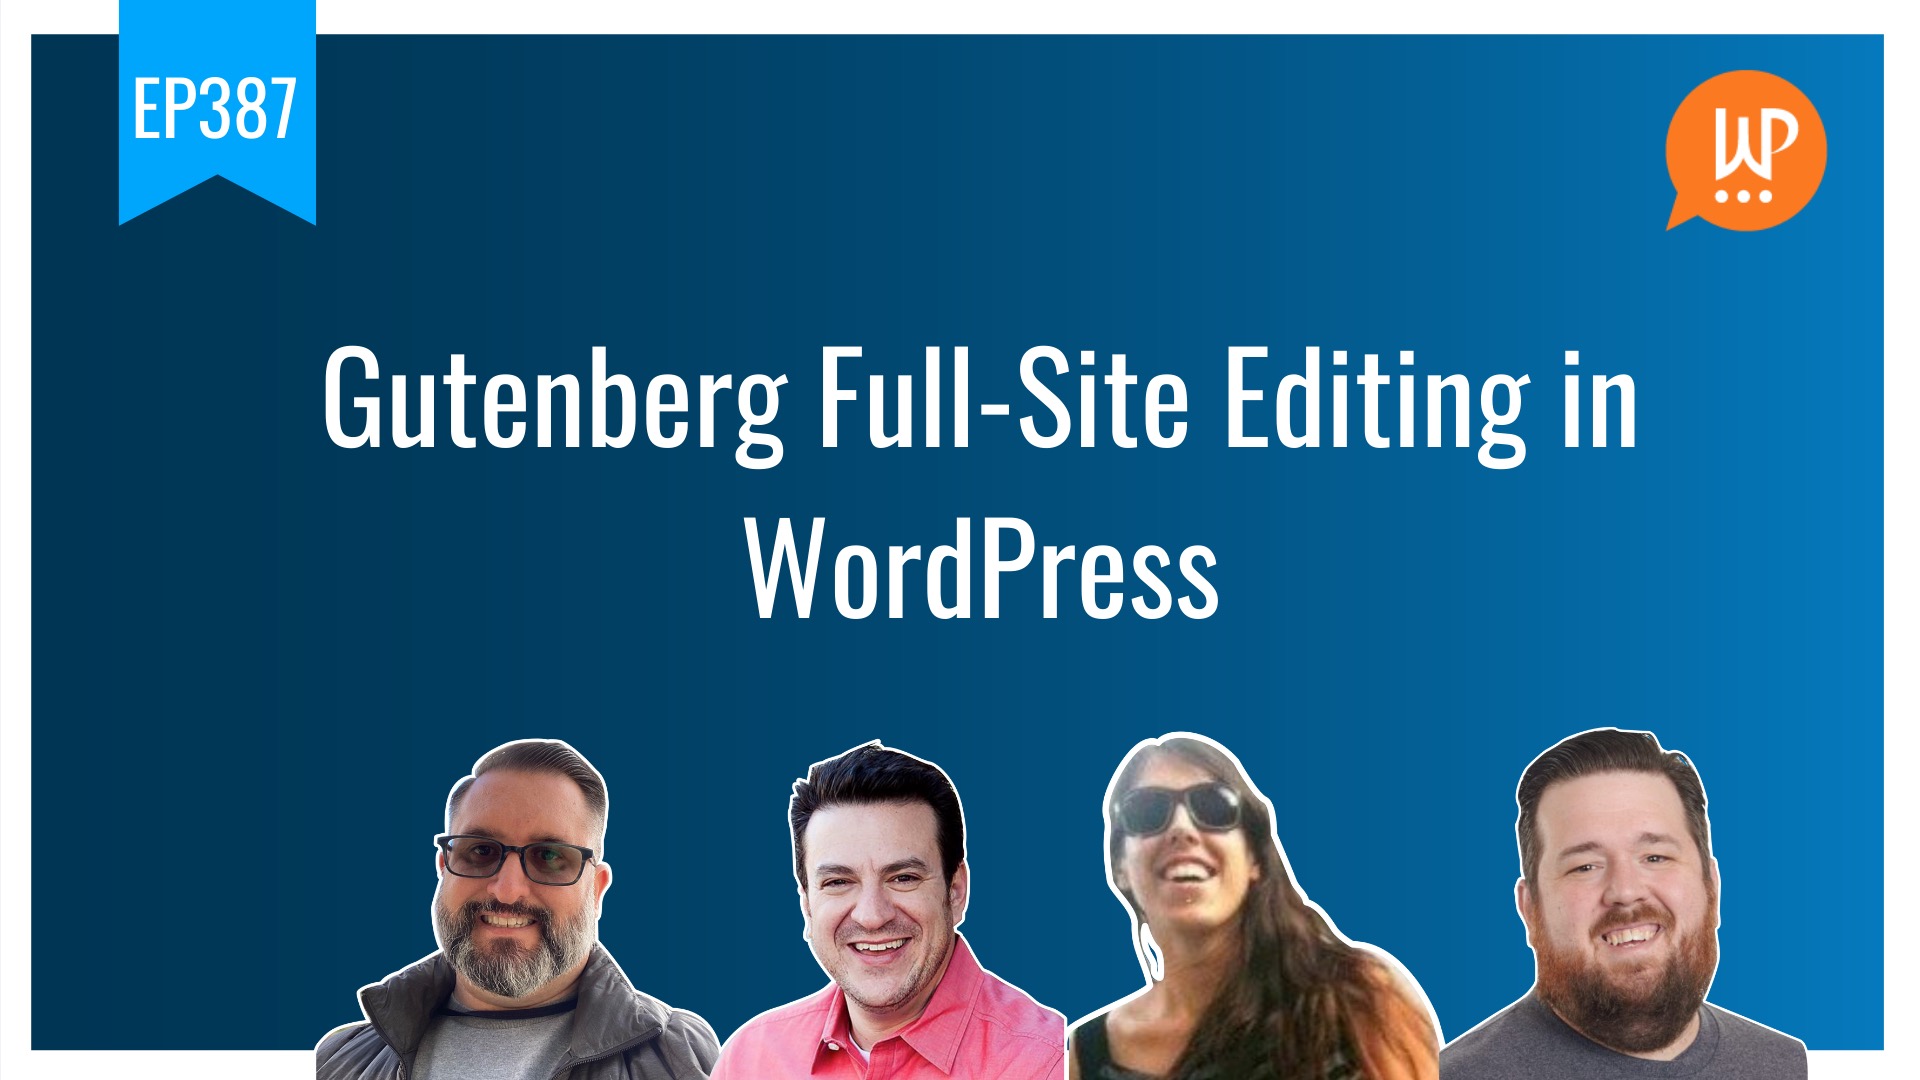 EP387 – Gutenberg Full-Site Editing in WordPress